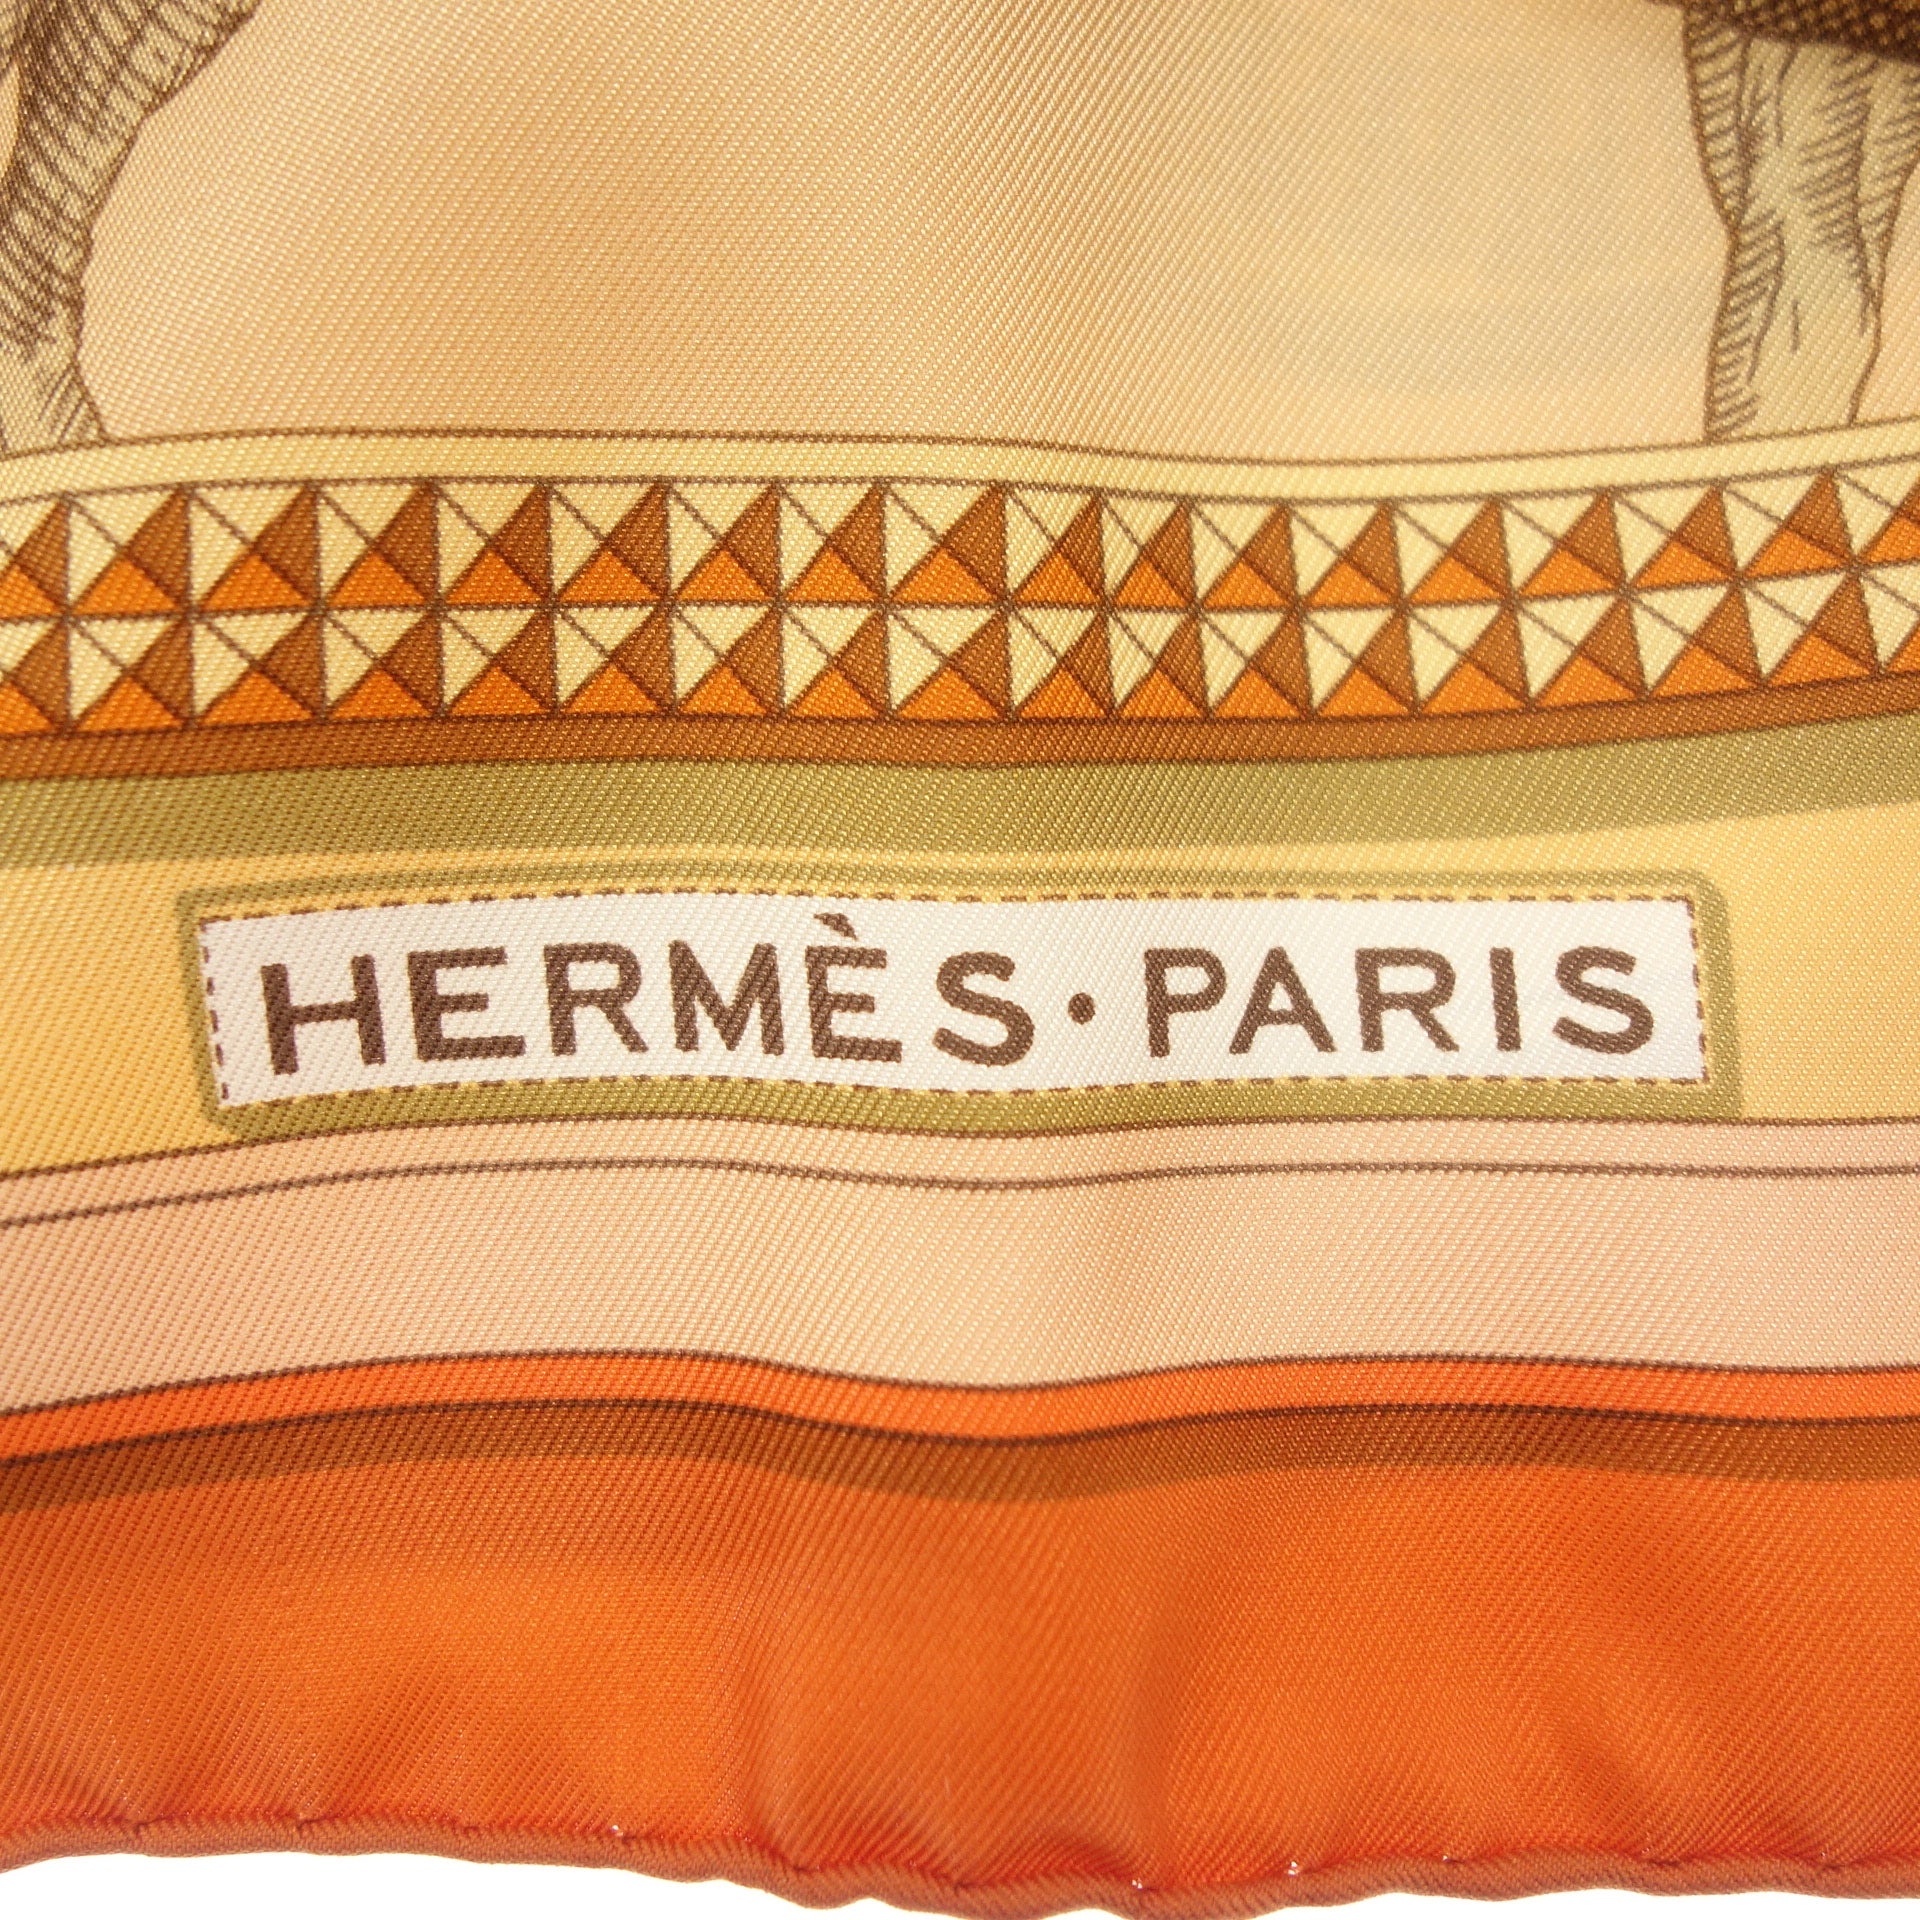 HERMES スカーフ カラー オレンジ ブラウン 100%正規品 - 小物